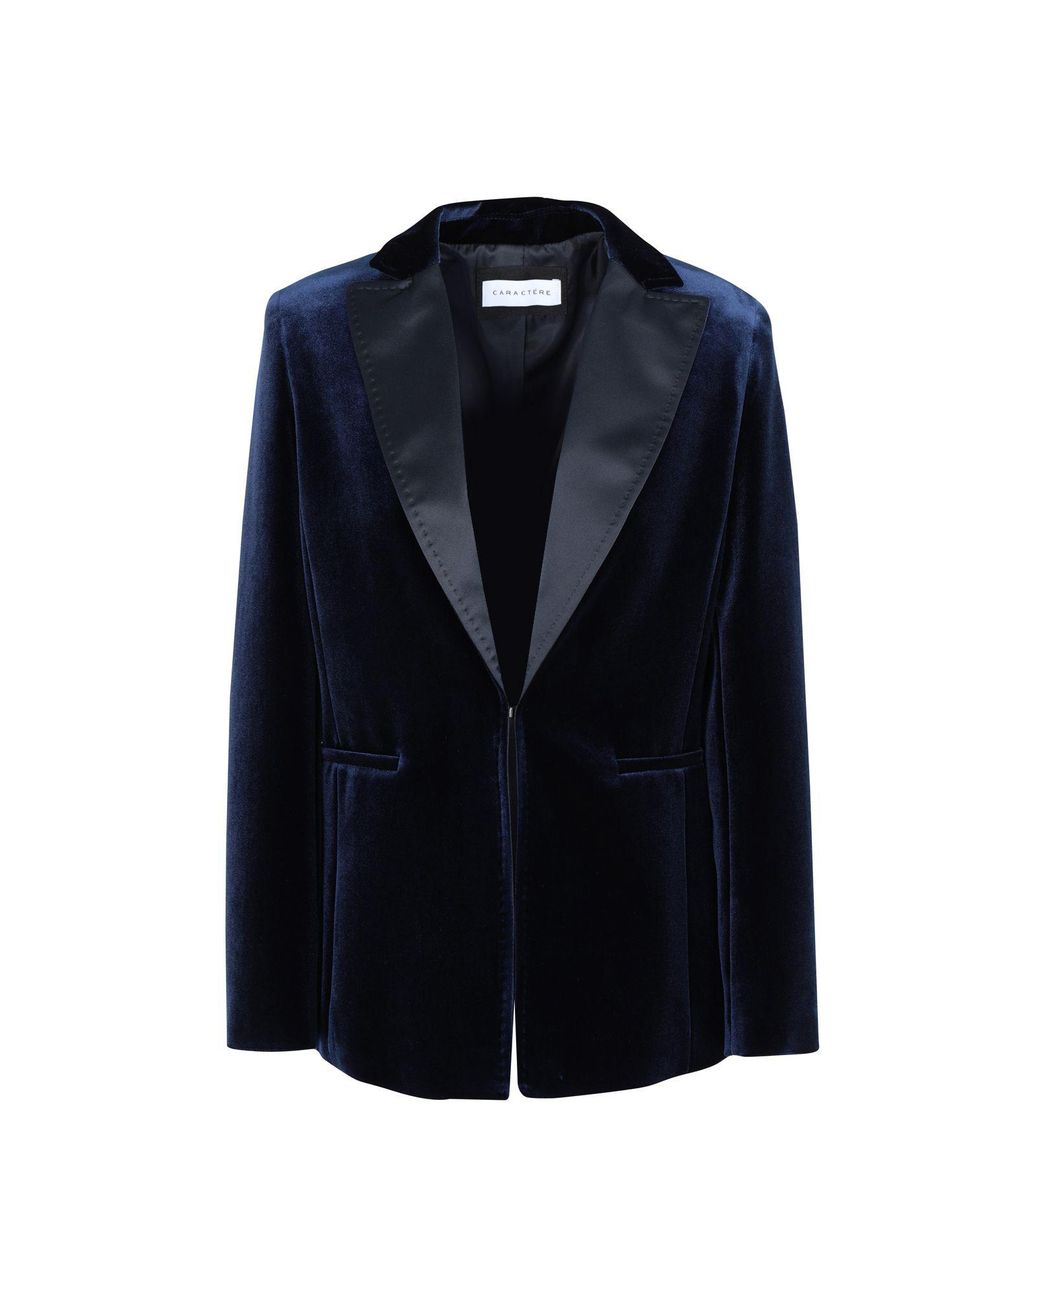 Caractere Velvet Suit Jacket in Dark Blue (Blue) - Lyst